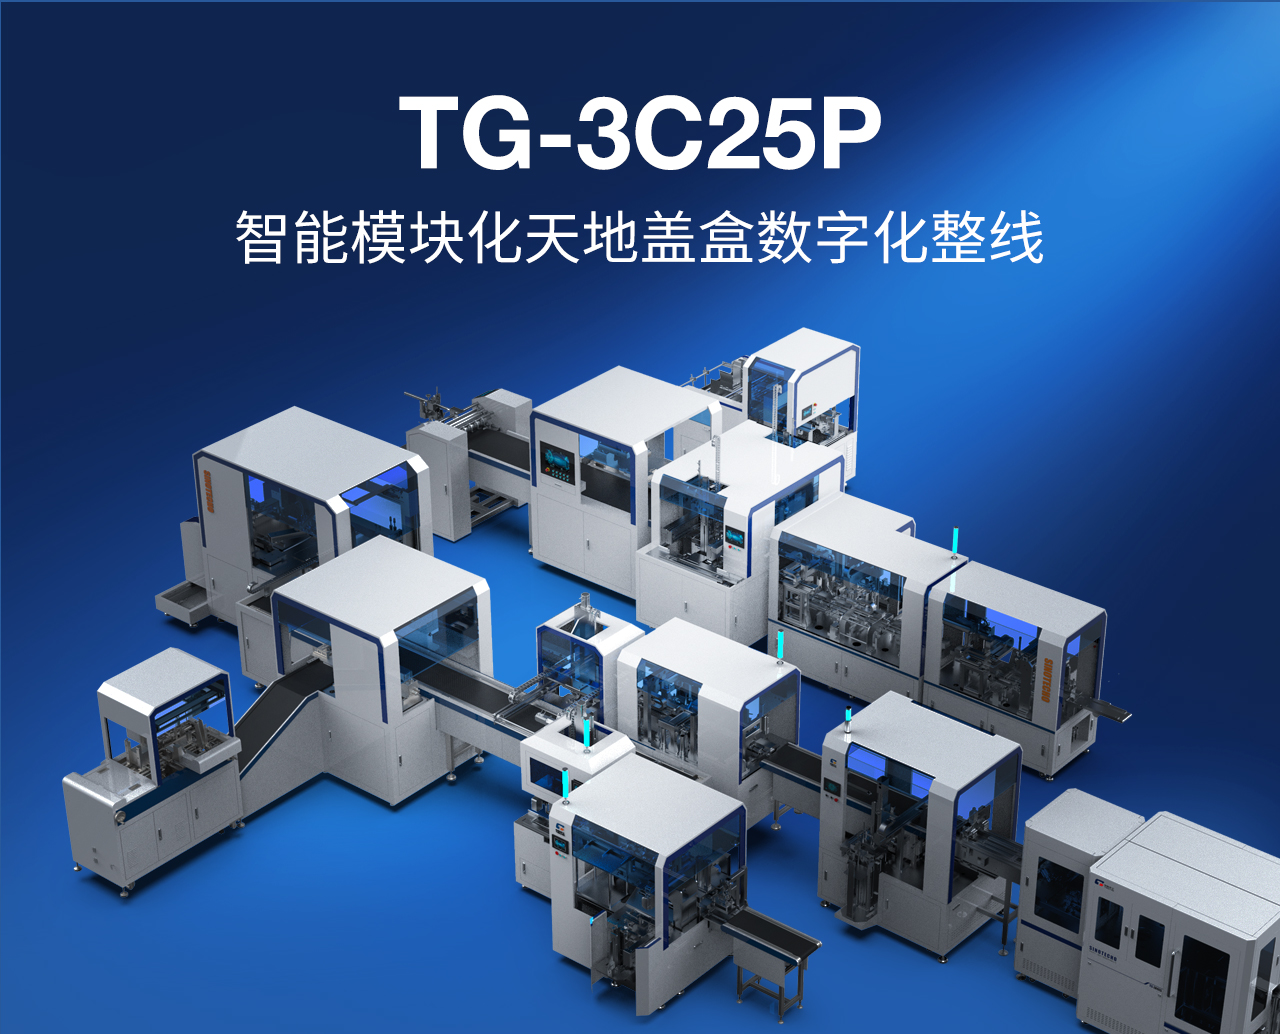 1——TG-3C25P智能模块化天地盖盒数字化整线_01.jpg